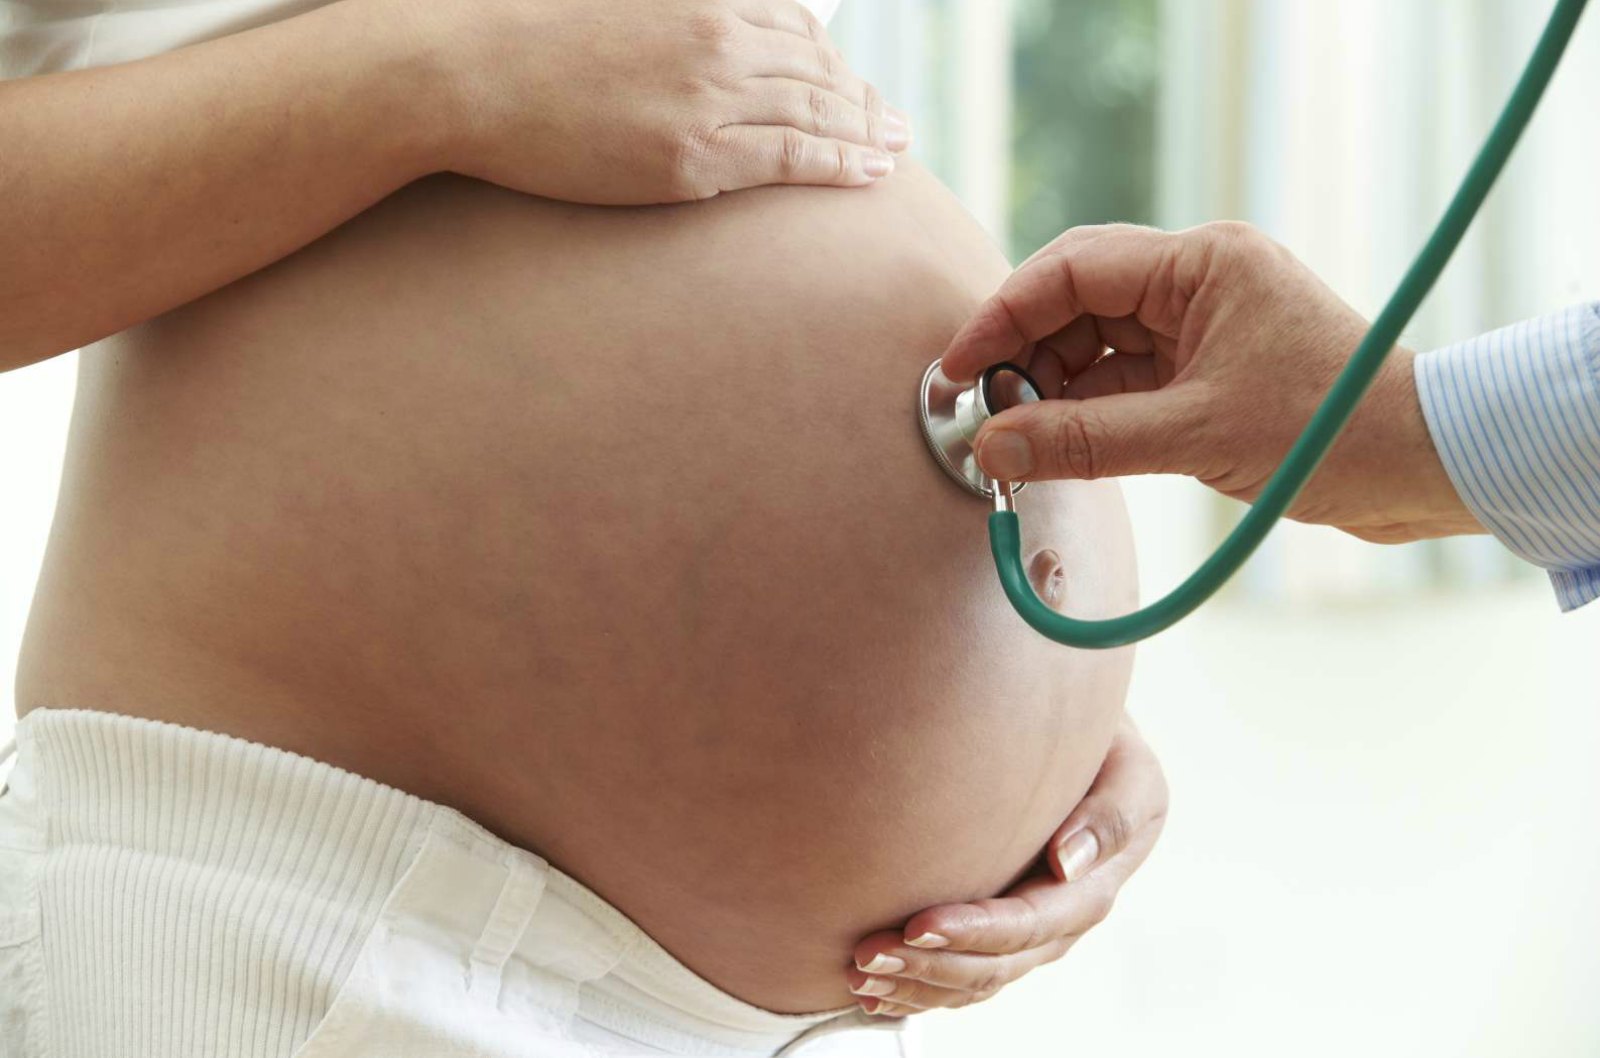 Smith-Lemli-Opitz Syndrome Detection Possible Using Safer Prenatal Testing